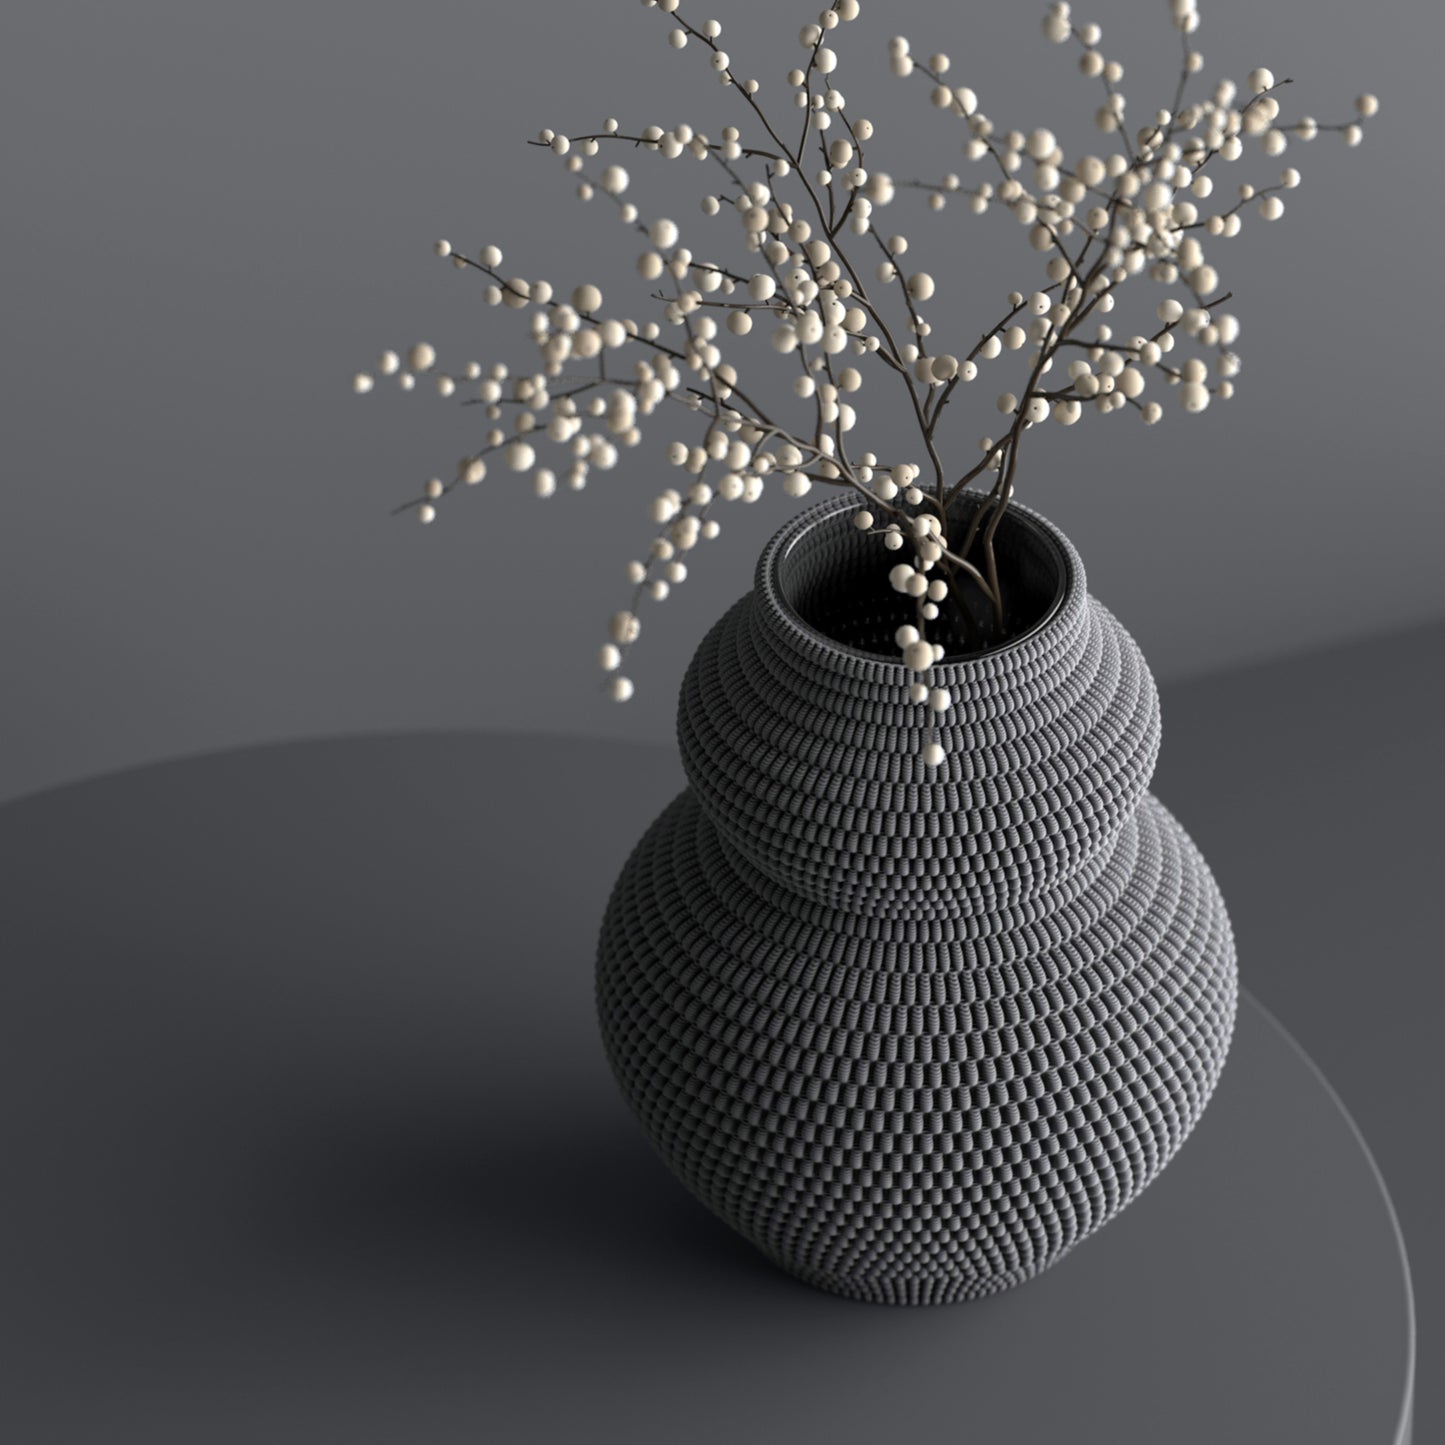 Weave Vase 04